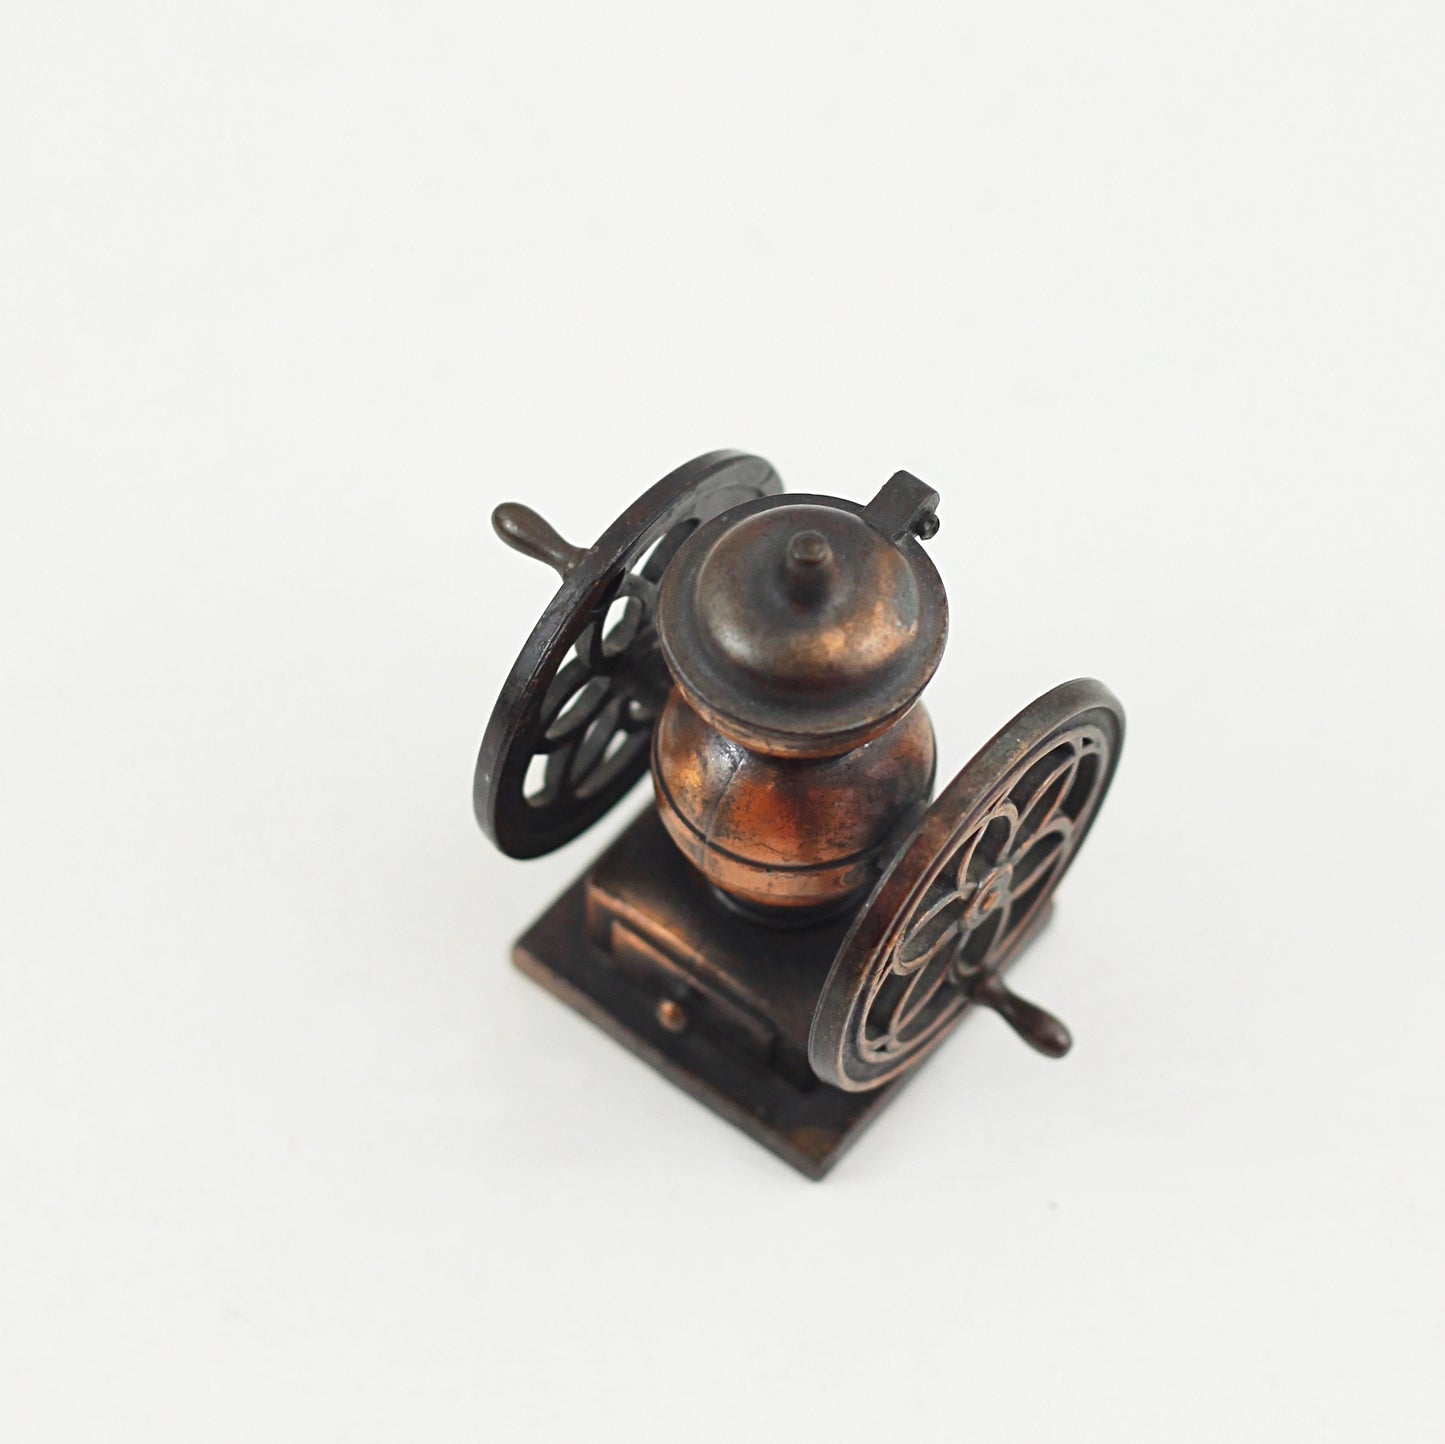 SOLD - Vintage Miniature Coffee Grinder Pencil Sharpener